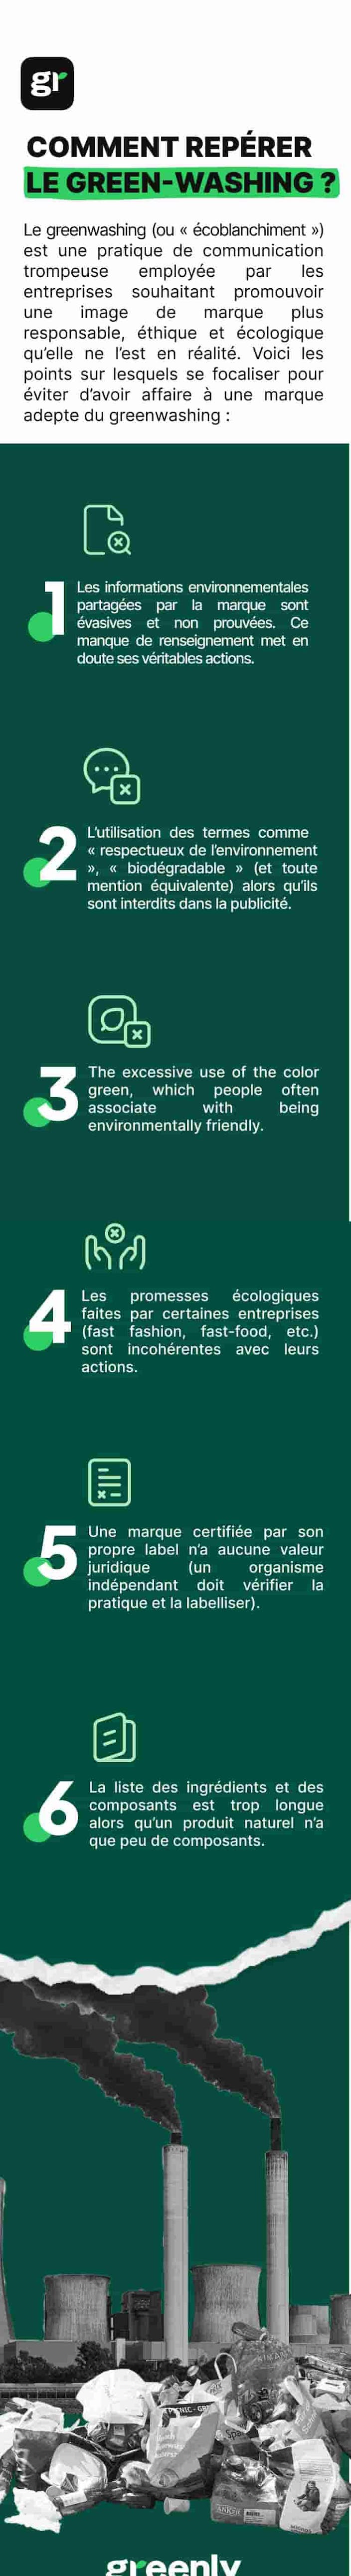 Infographie comment repérer le greenwashing